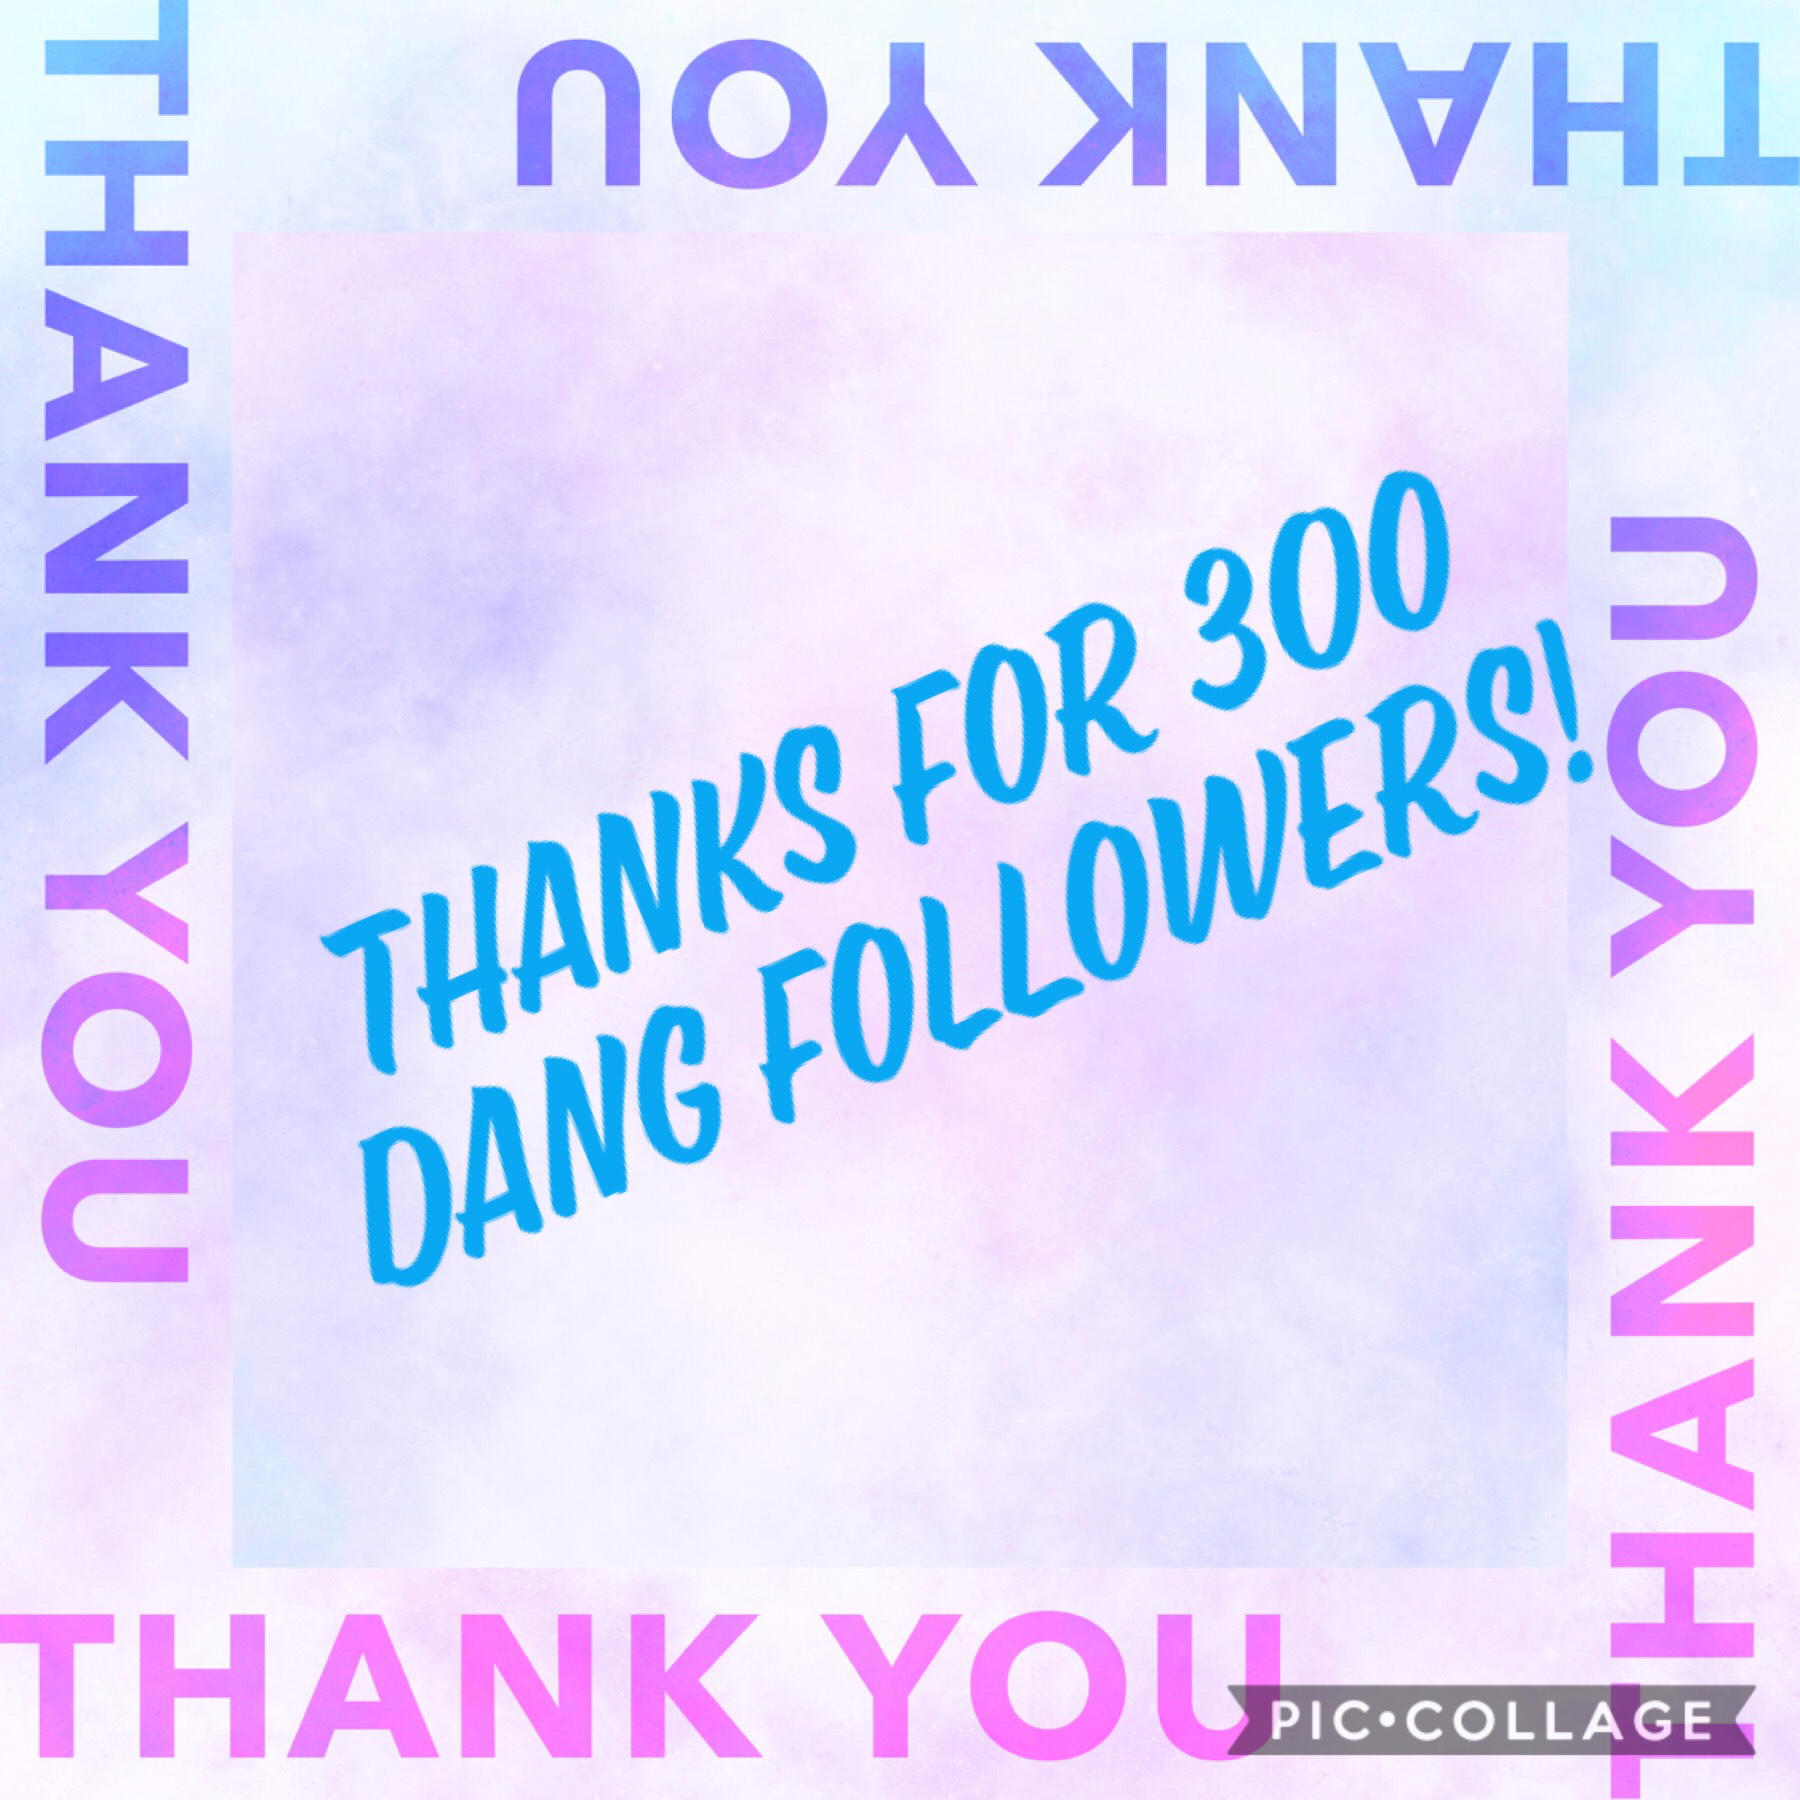 300 followers!